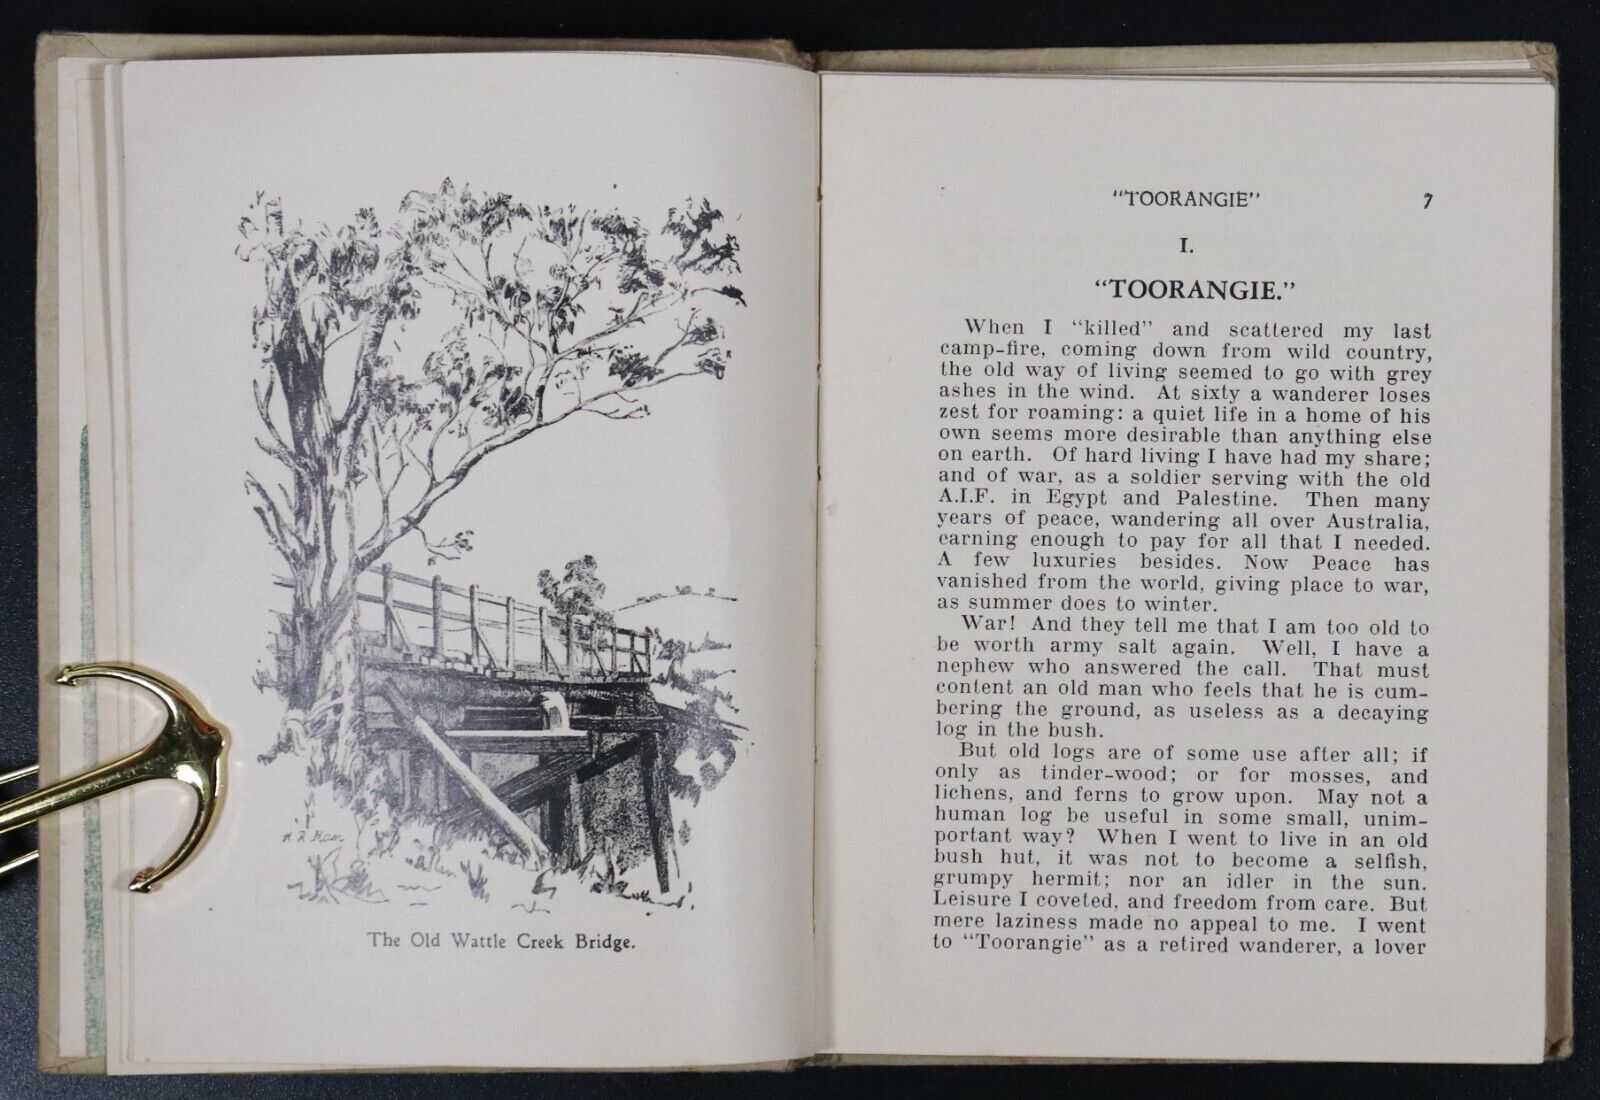 1944 From A Bush Hut by C. Barrett Antique Australian Fiction Book Illustrated